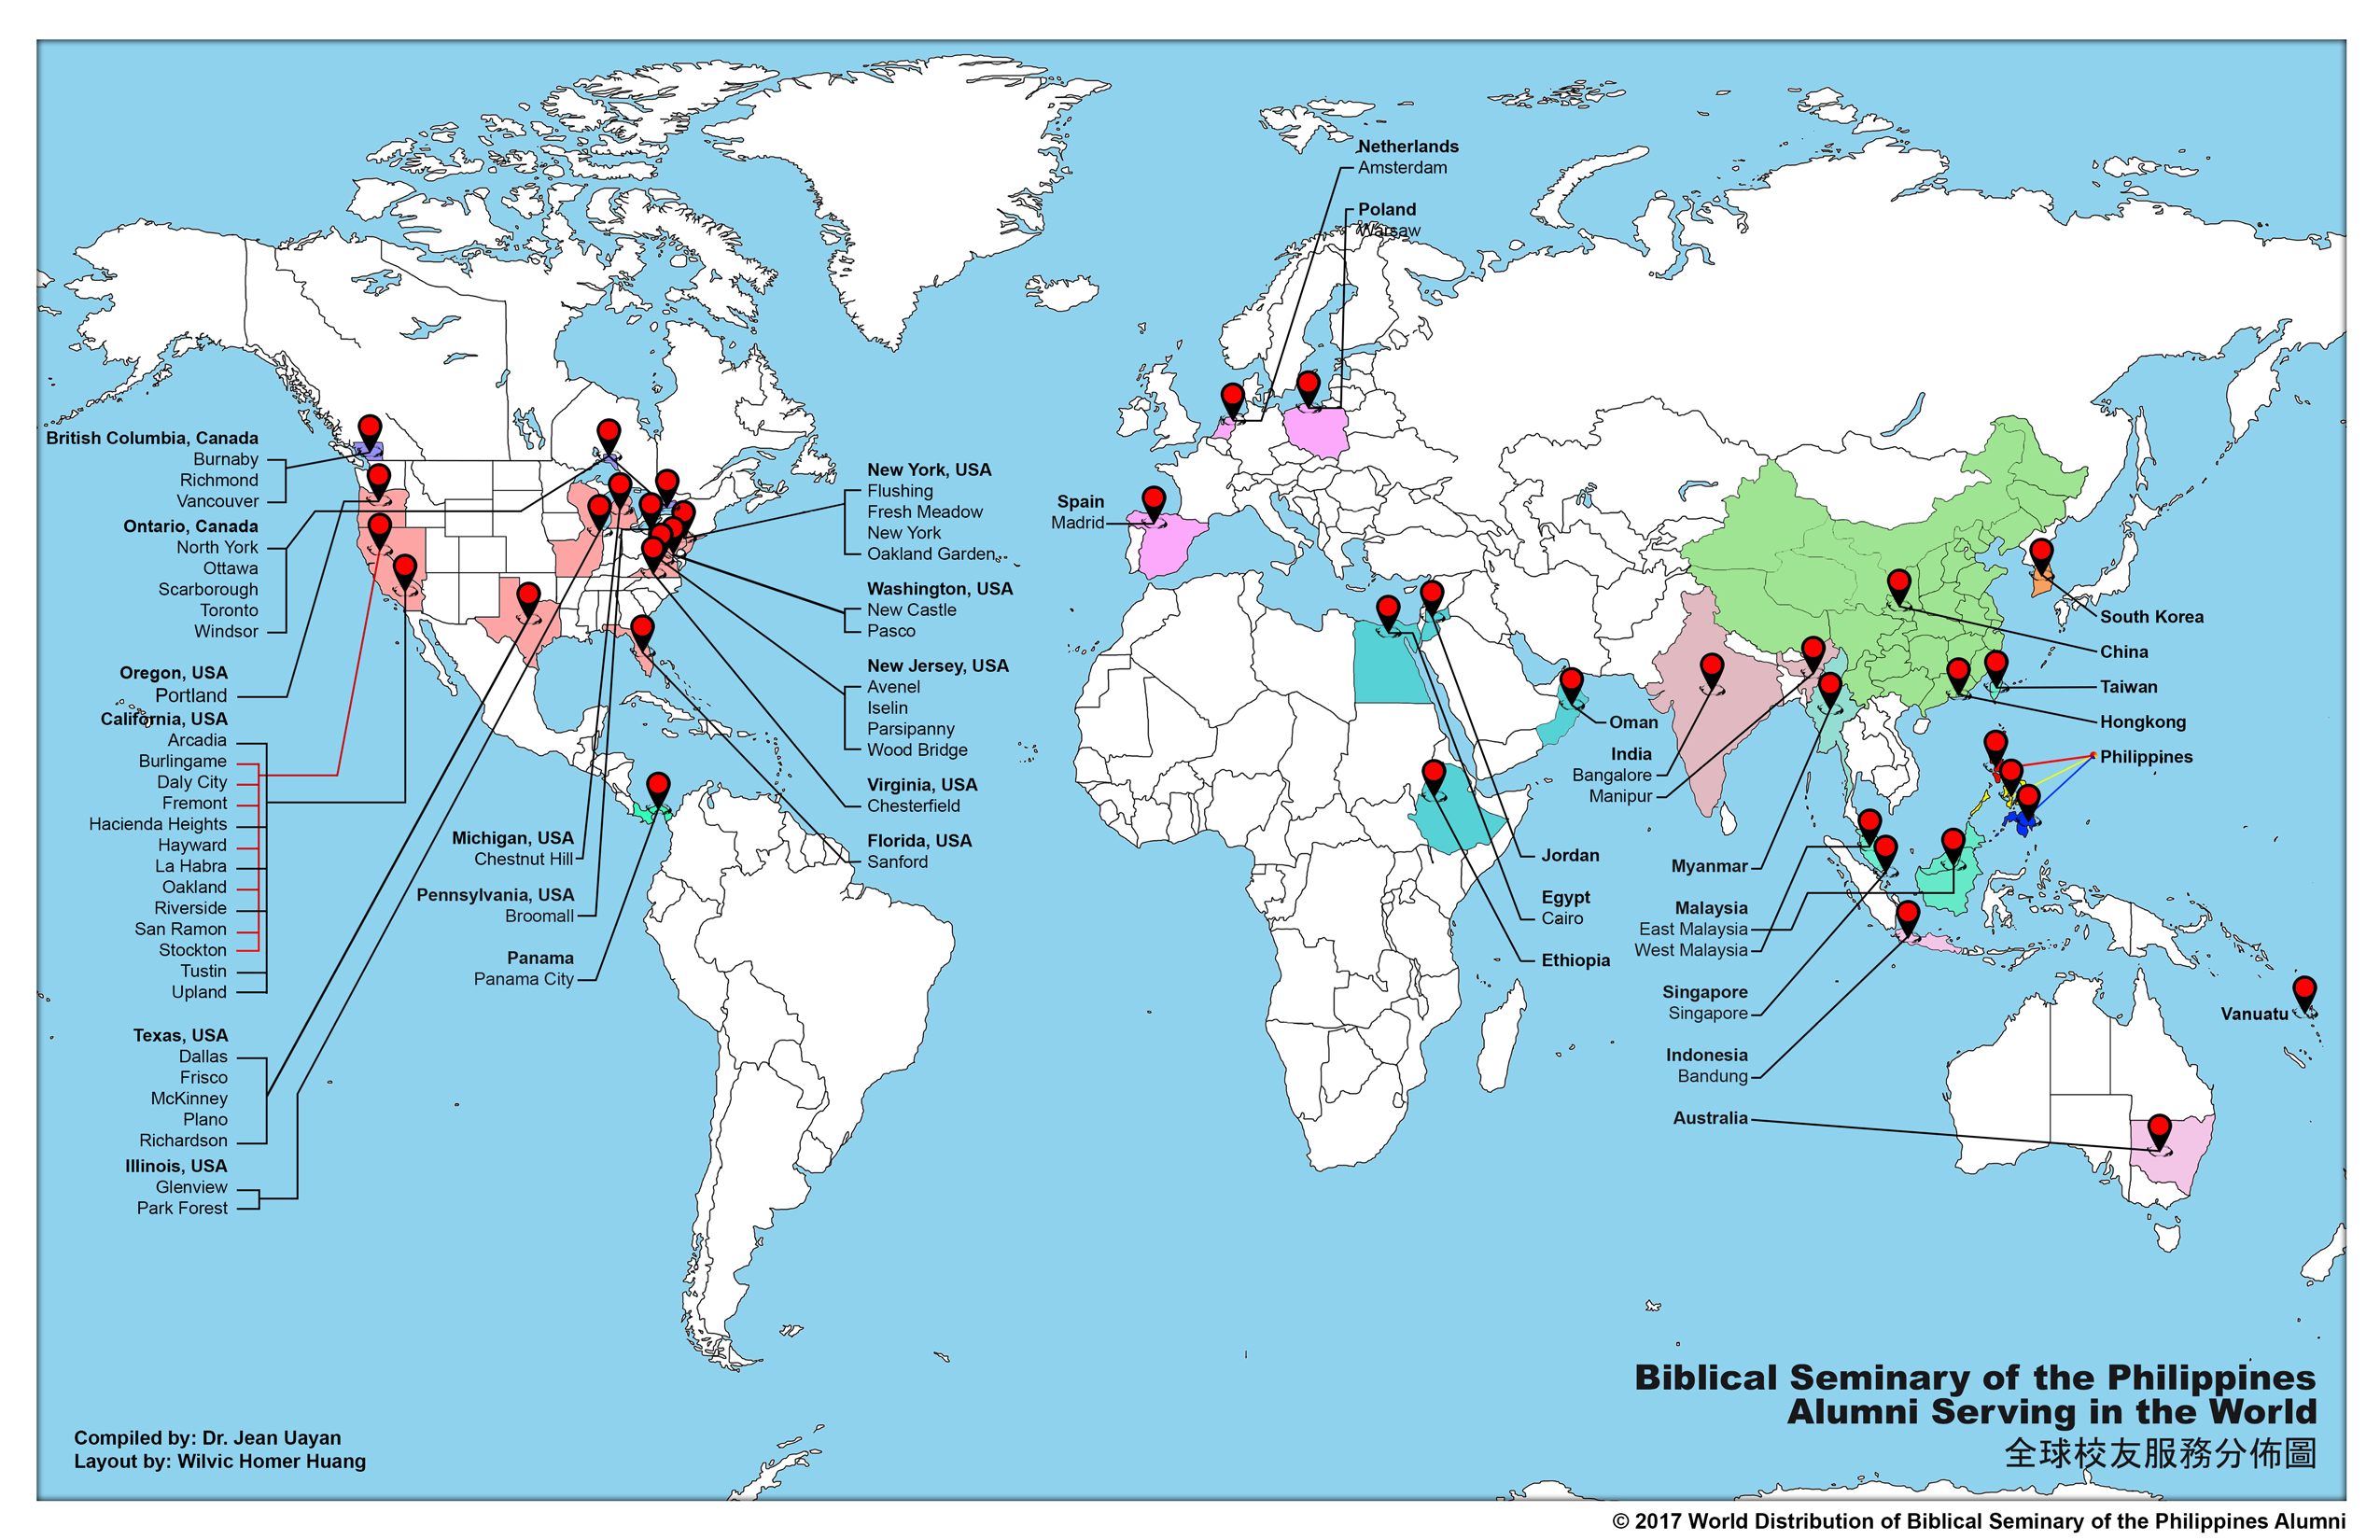 Alumni World Map – BSOP
